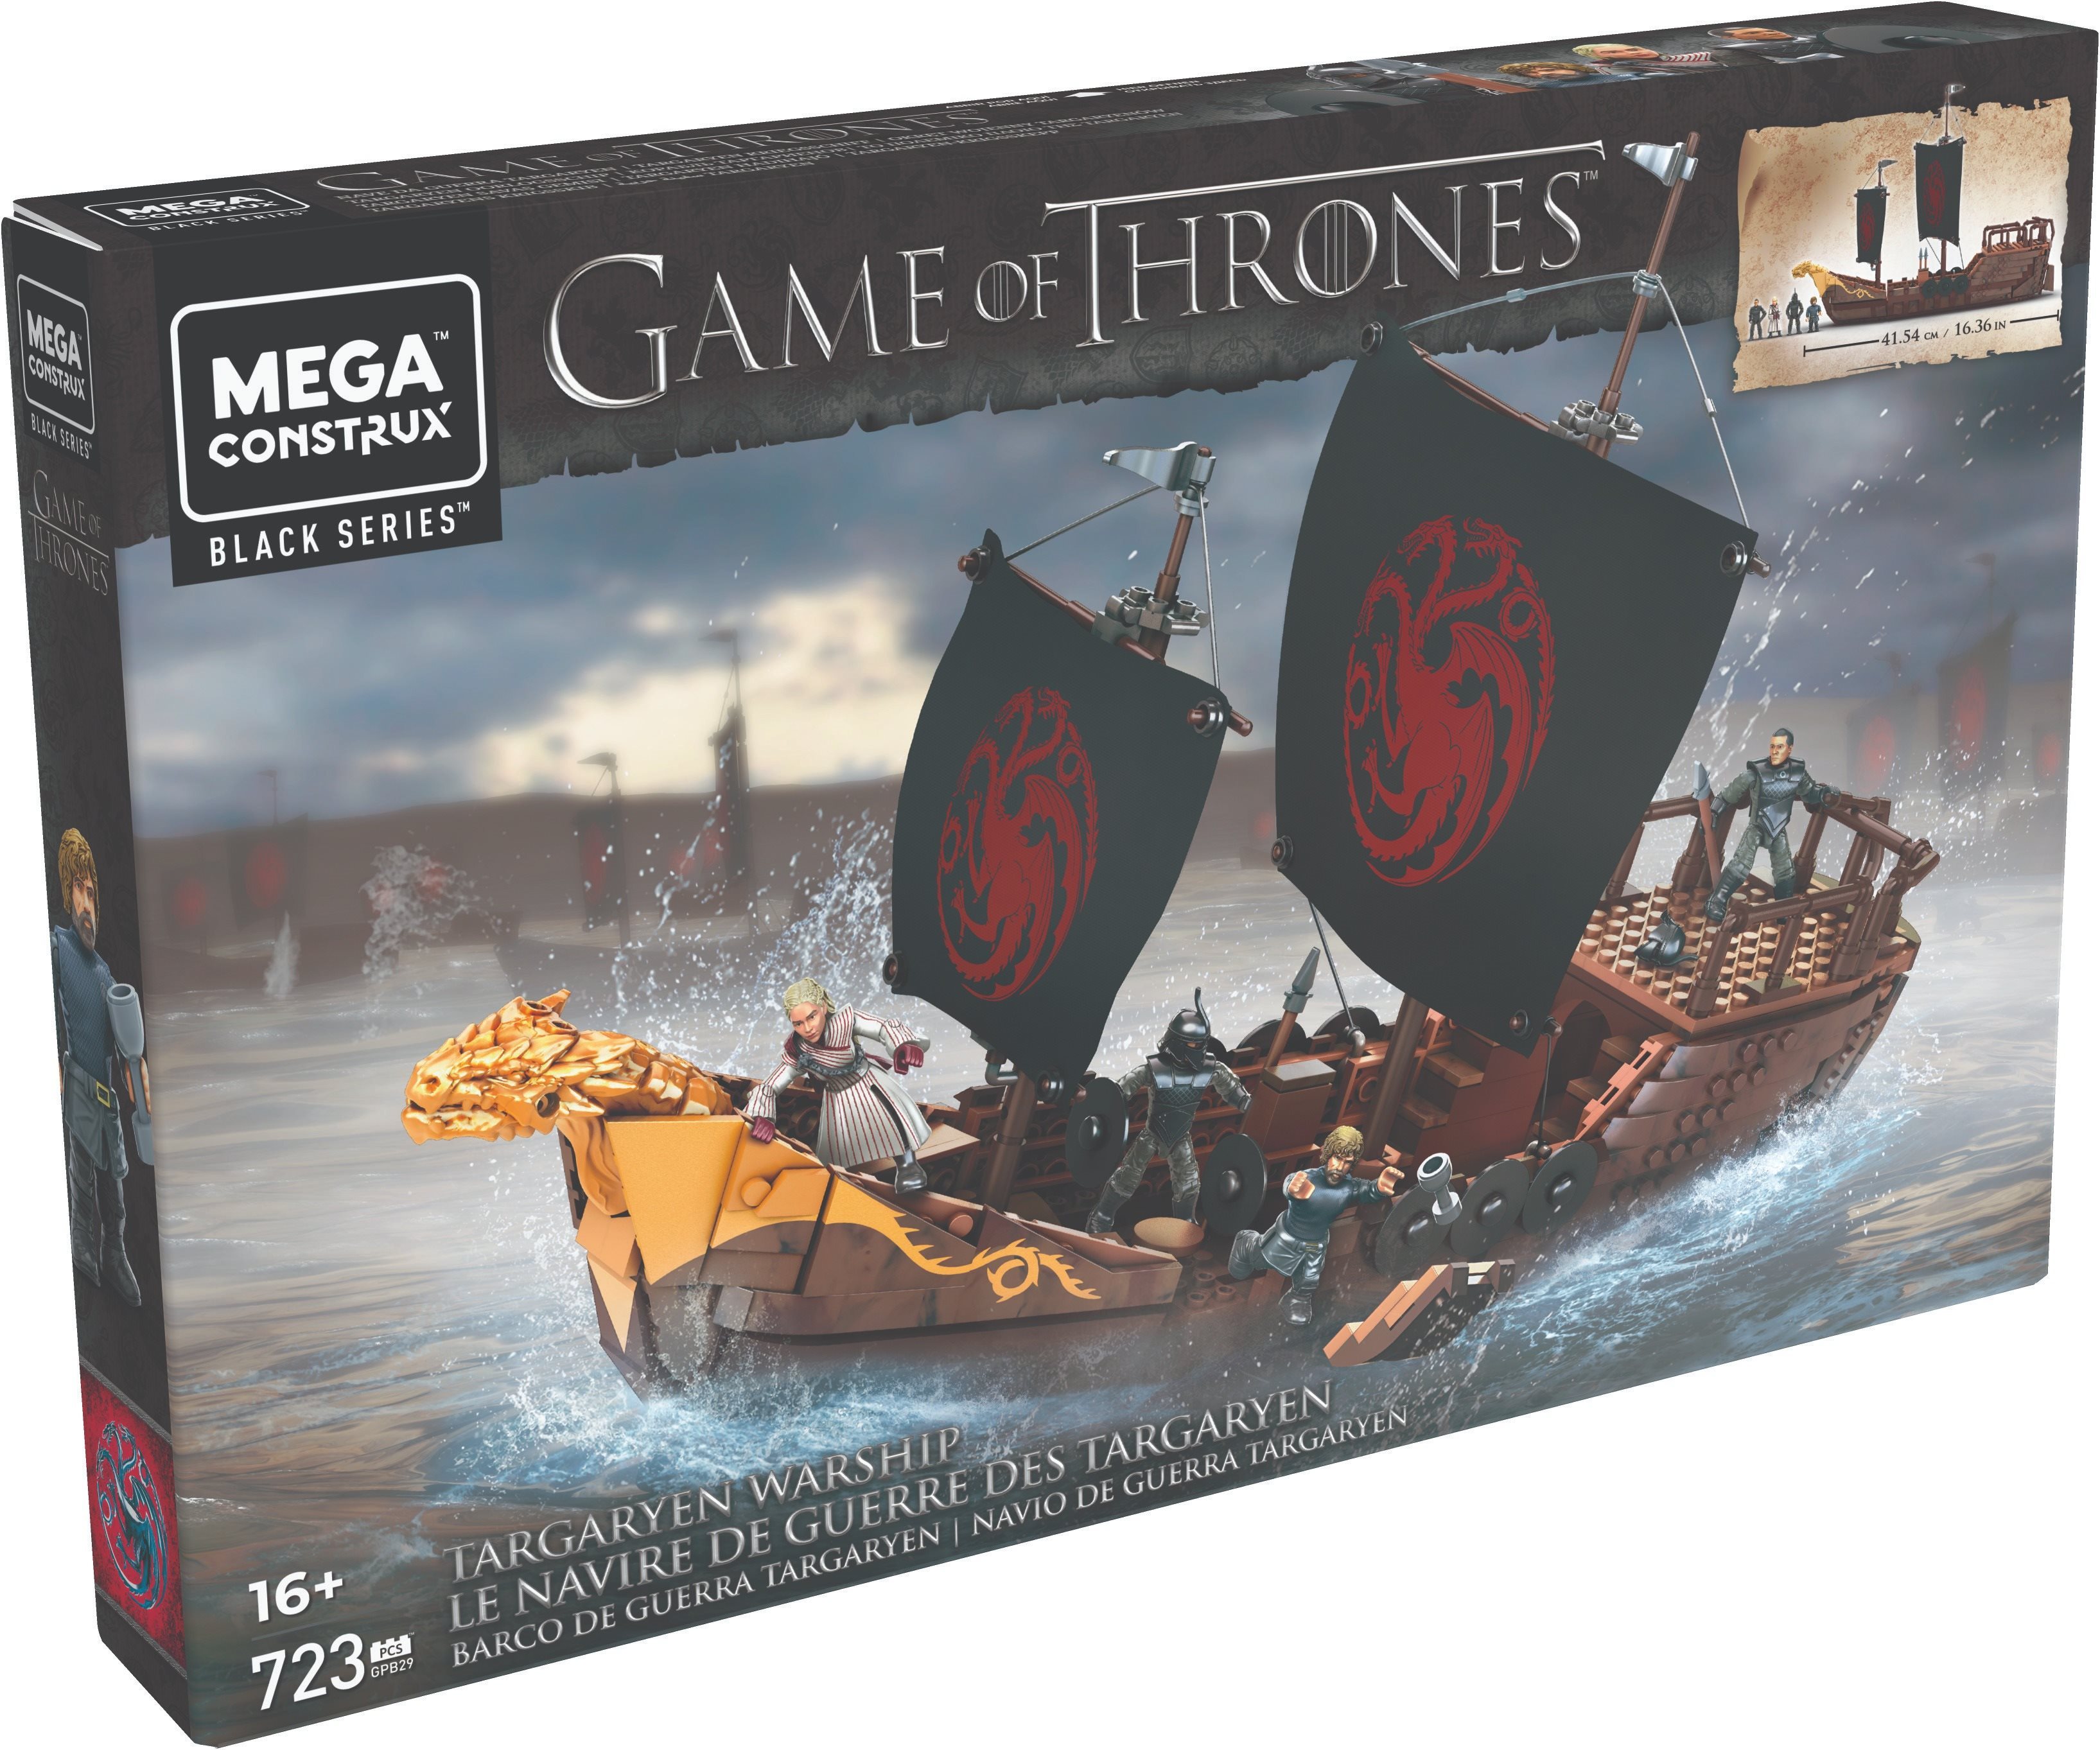 Bausatz Mega Bloks Game of Thrones Targaryen-Schiff Verpackung/Box